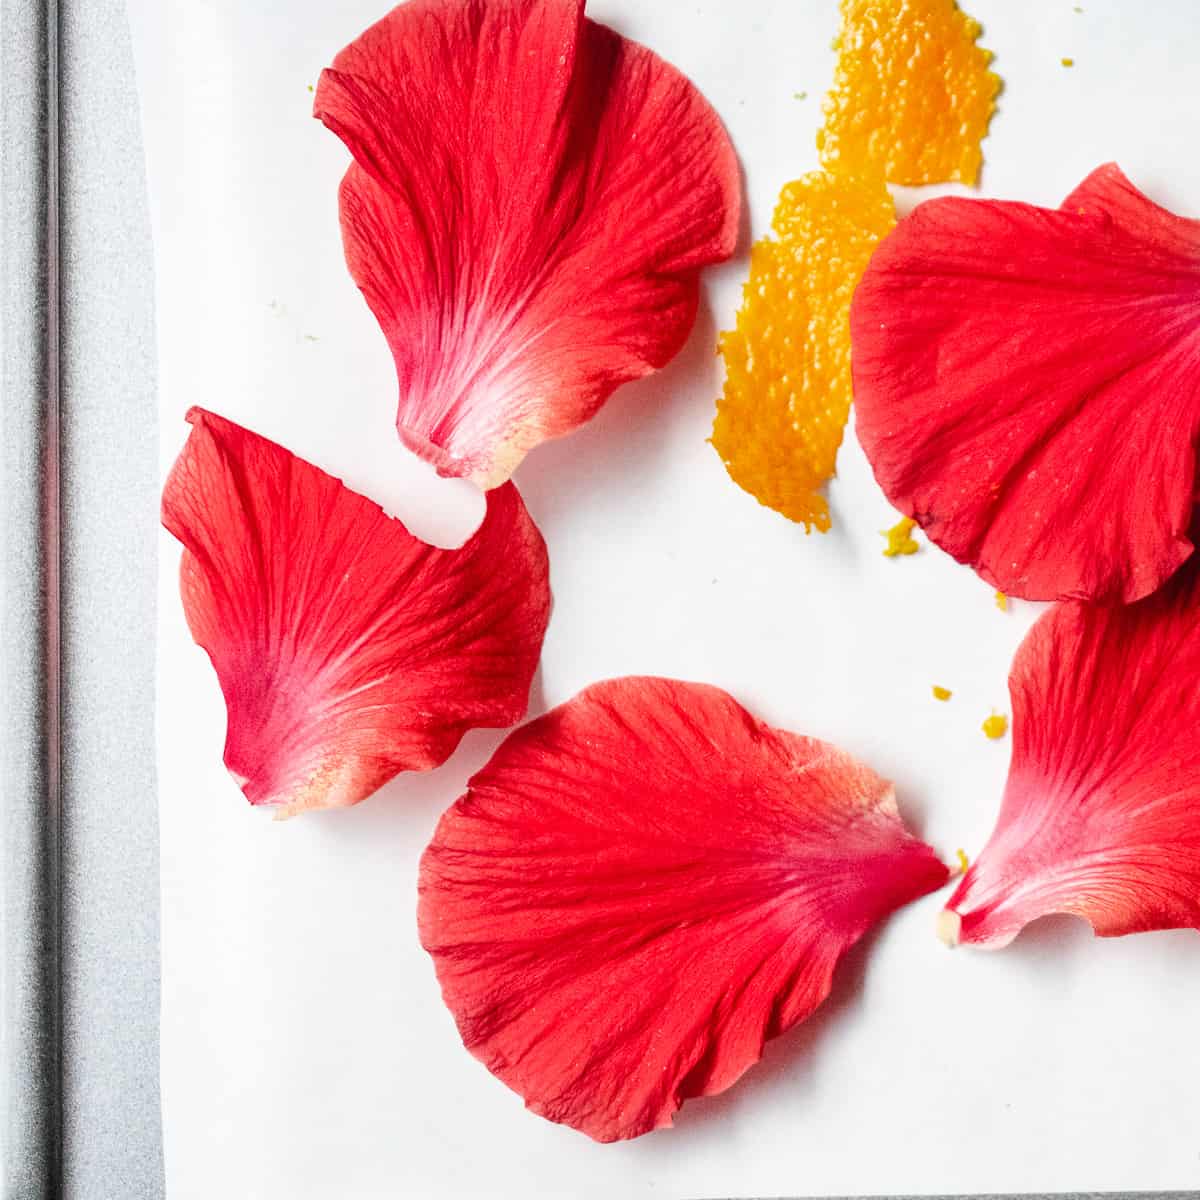 Hibiscus petals and orange peel on a baking sheet.